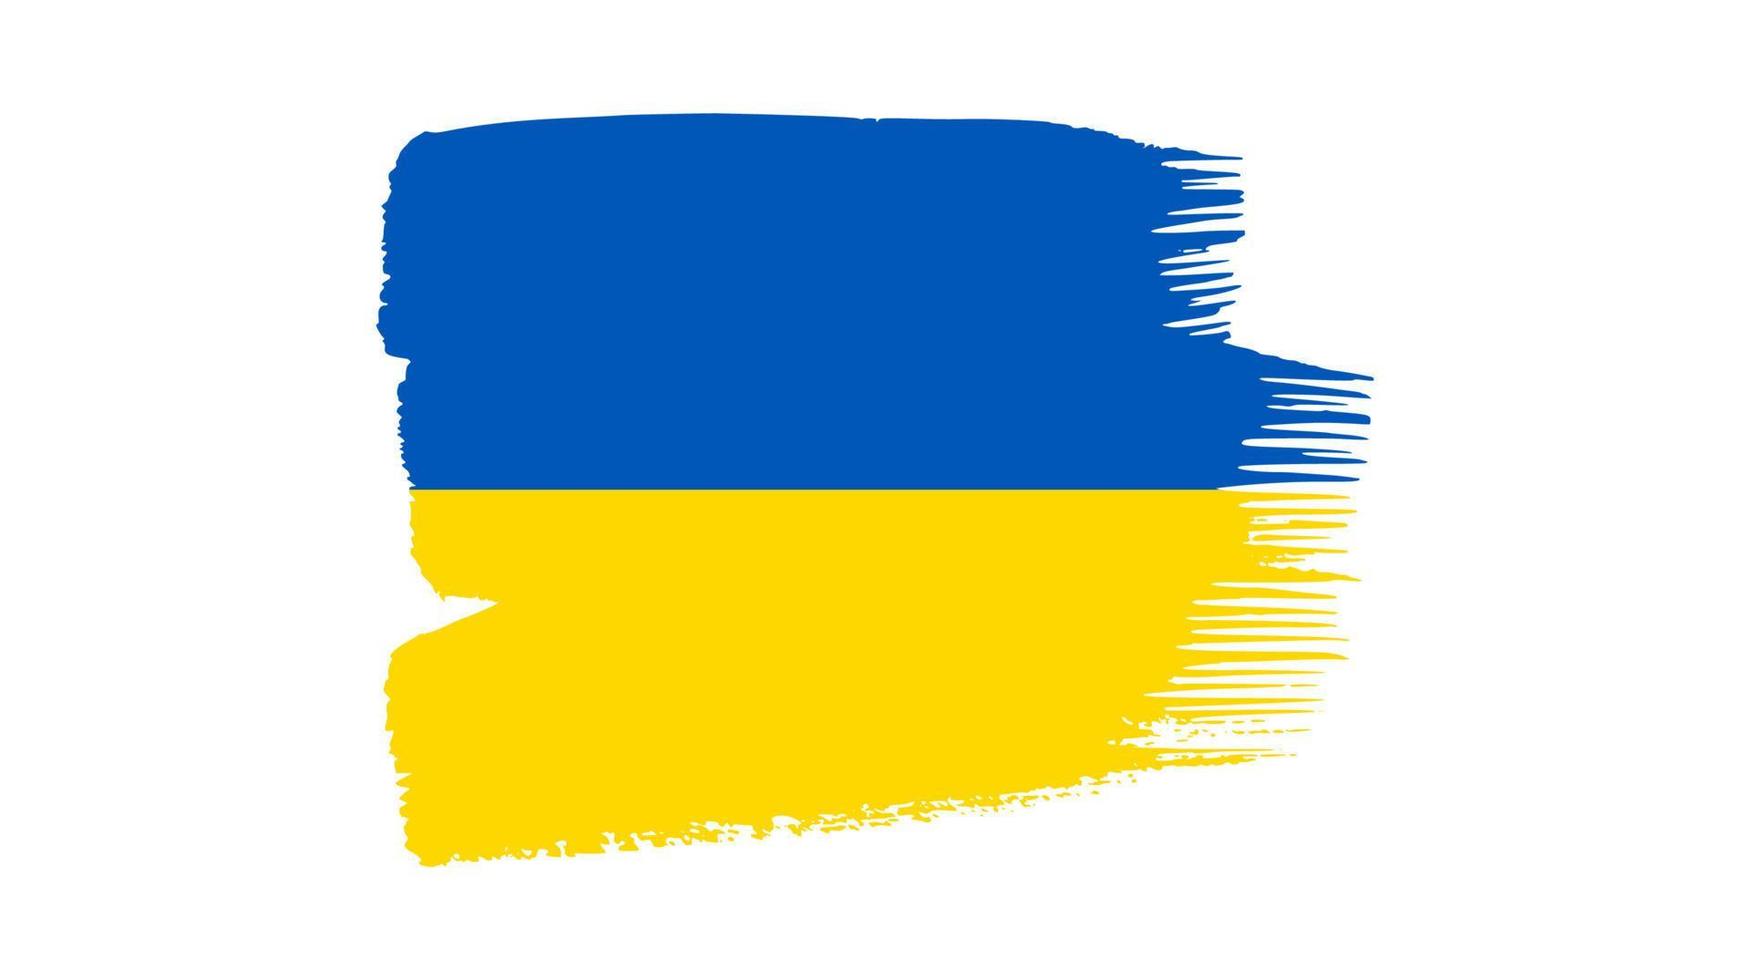 Ukrainian national flag in grunge style. Painted with a brush stroke flag of Ukraine. Vector illustration